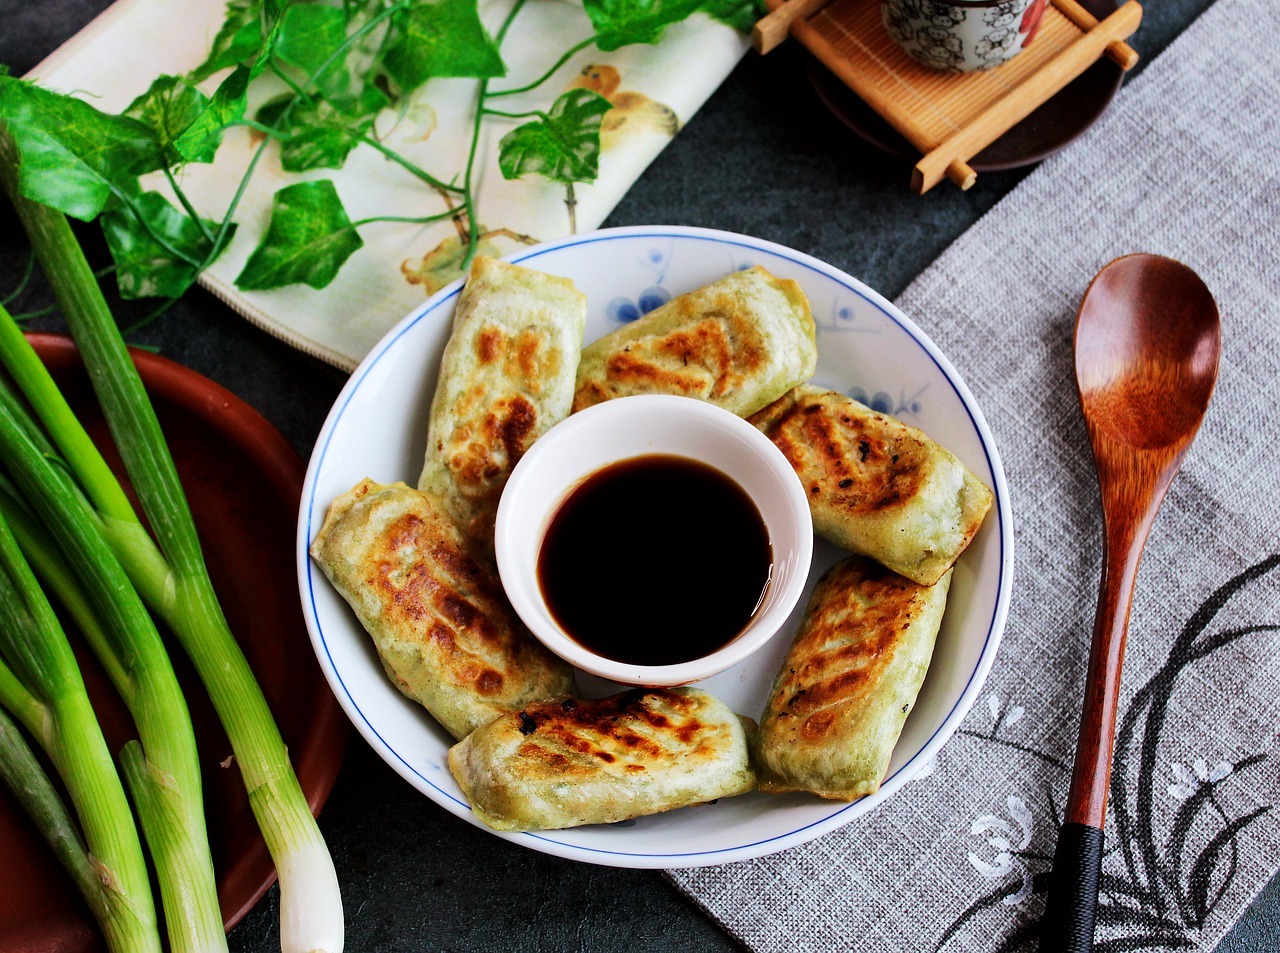 Pajeon - Green Onion Pancake